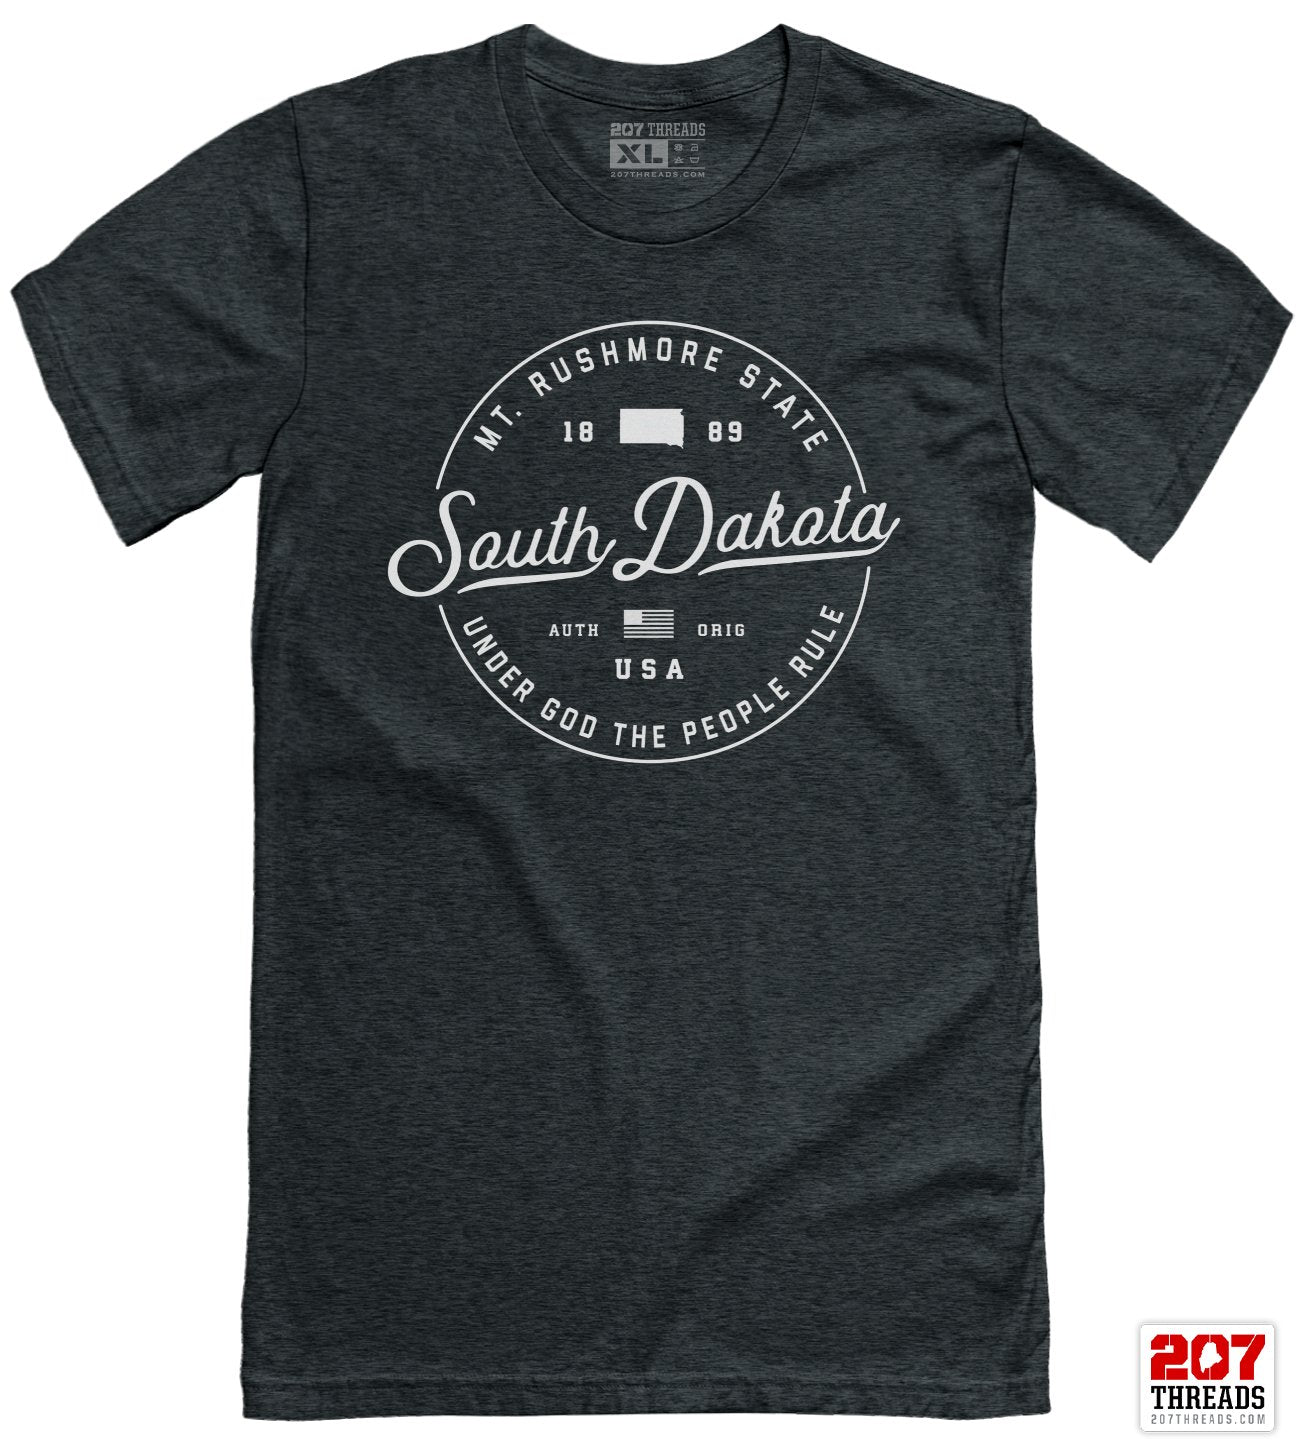 State of South Dakota T-Shirt - Soft South Dakota Vacation Tee